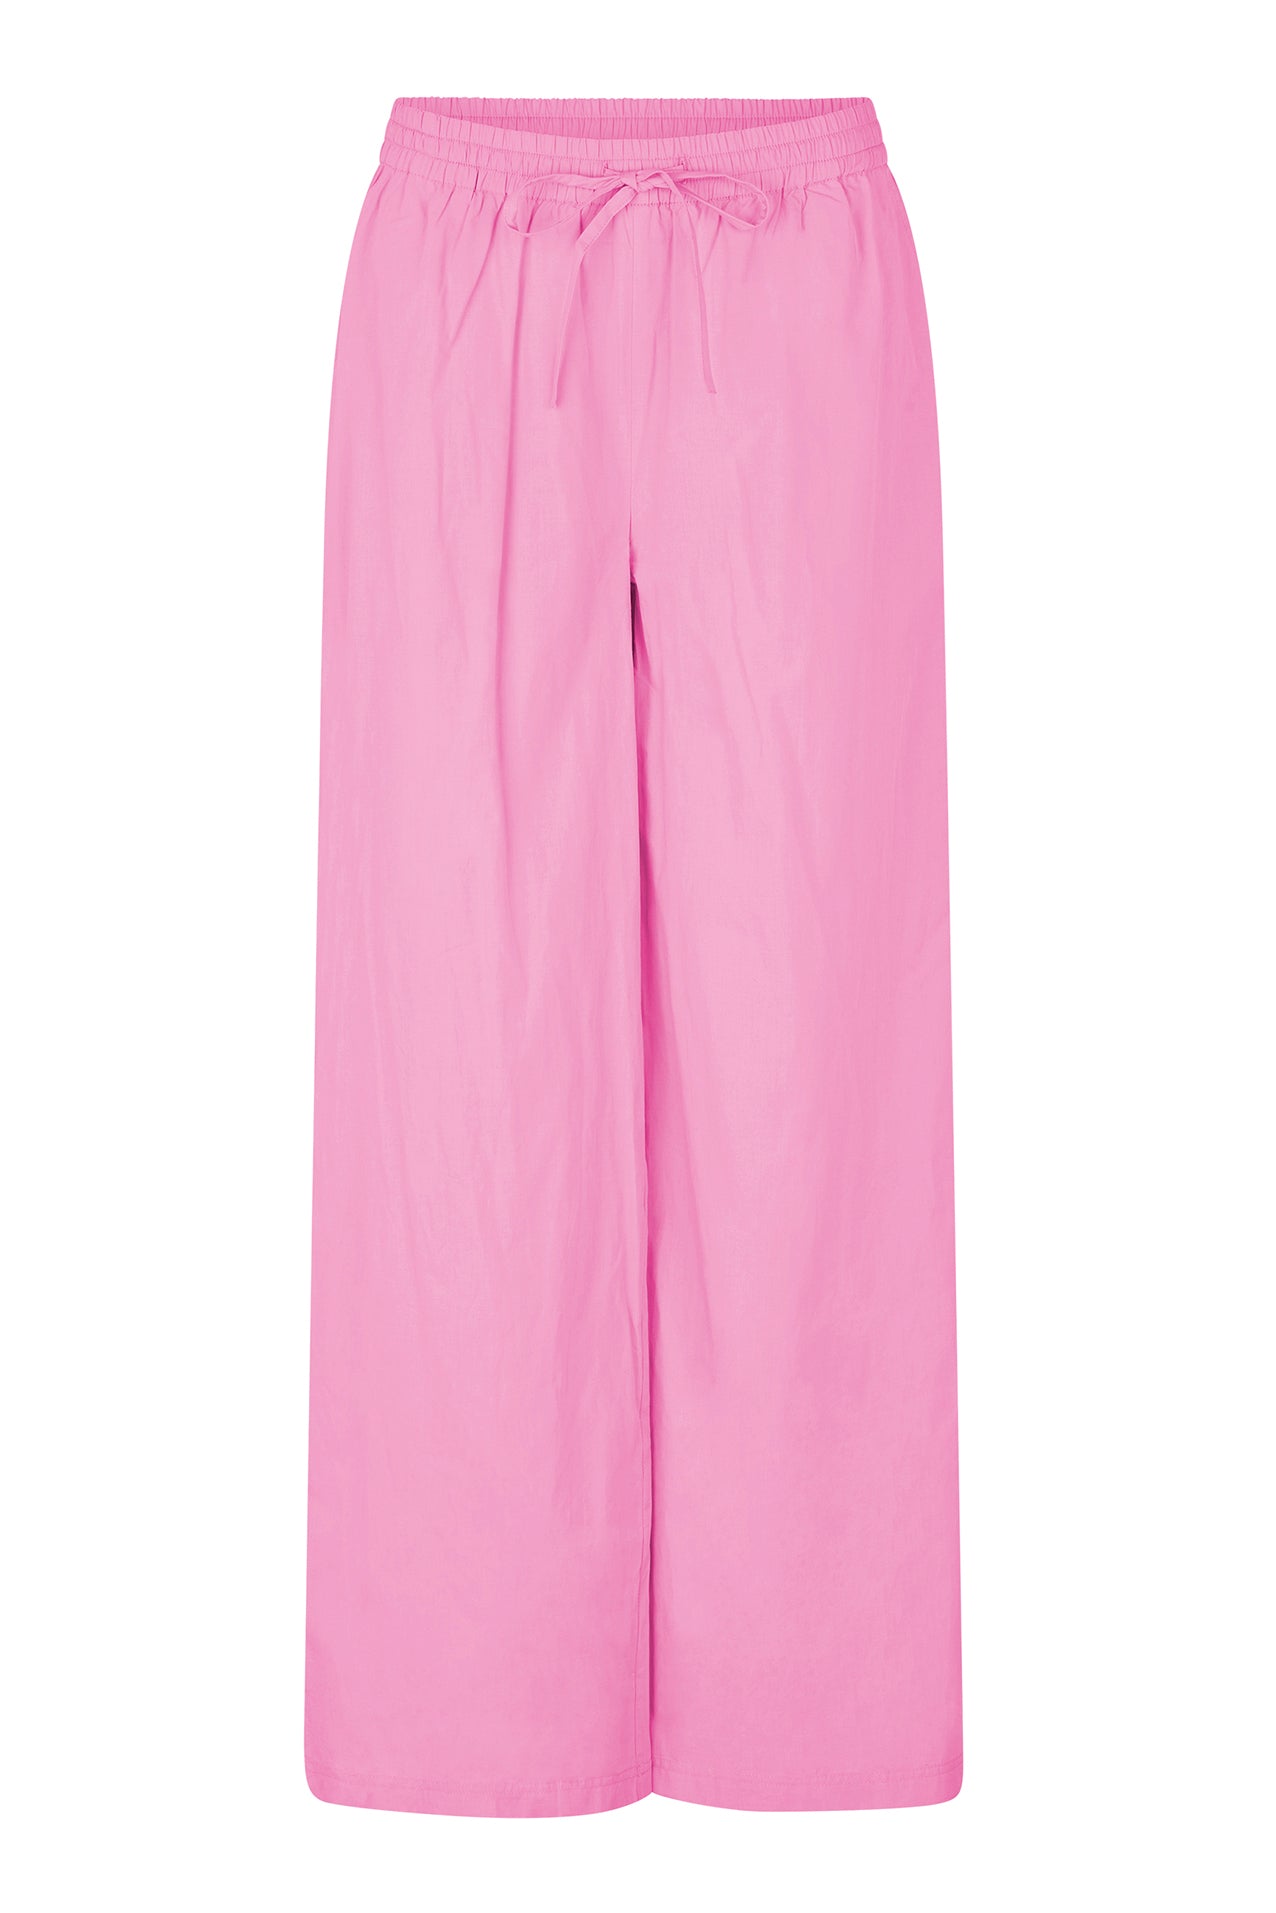 Lollys Laundry RitaLL Pants Pants 51 Pink